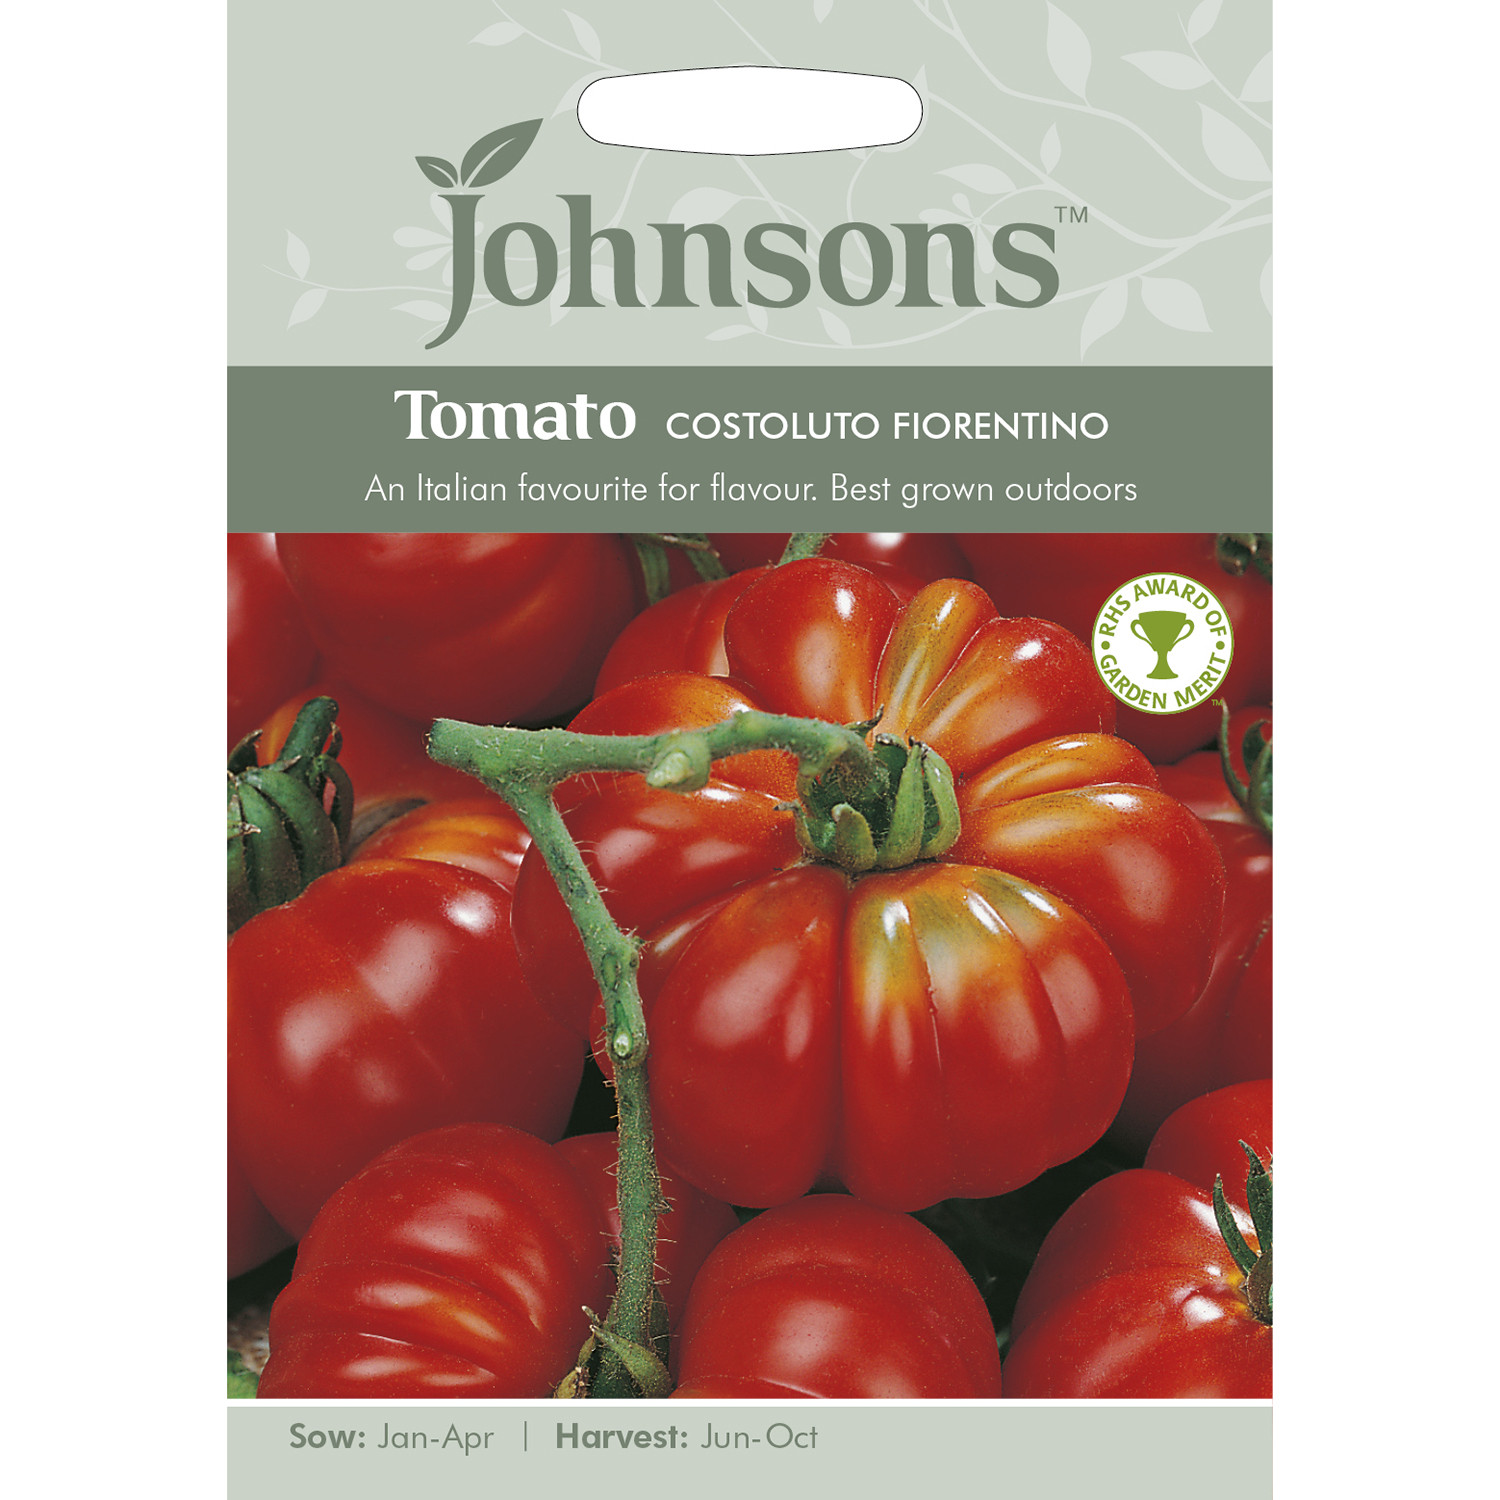 Johnsons Costoluto Fiorentino Tomato Seeds Image 2